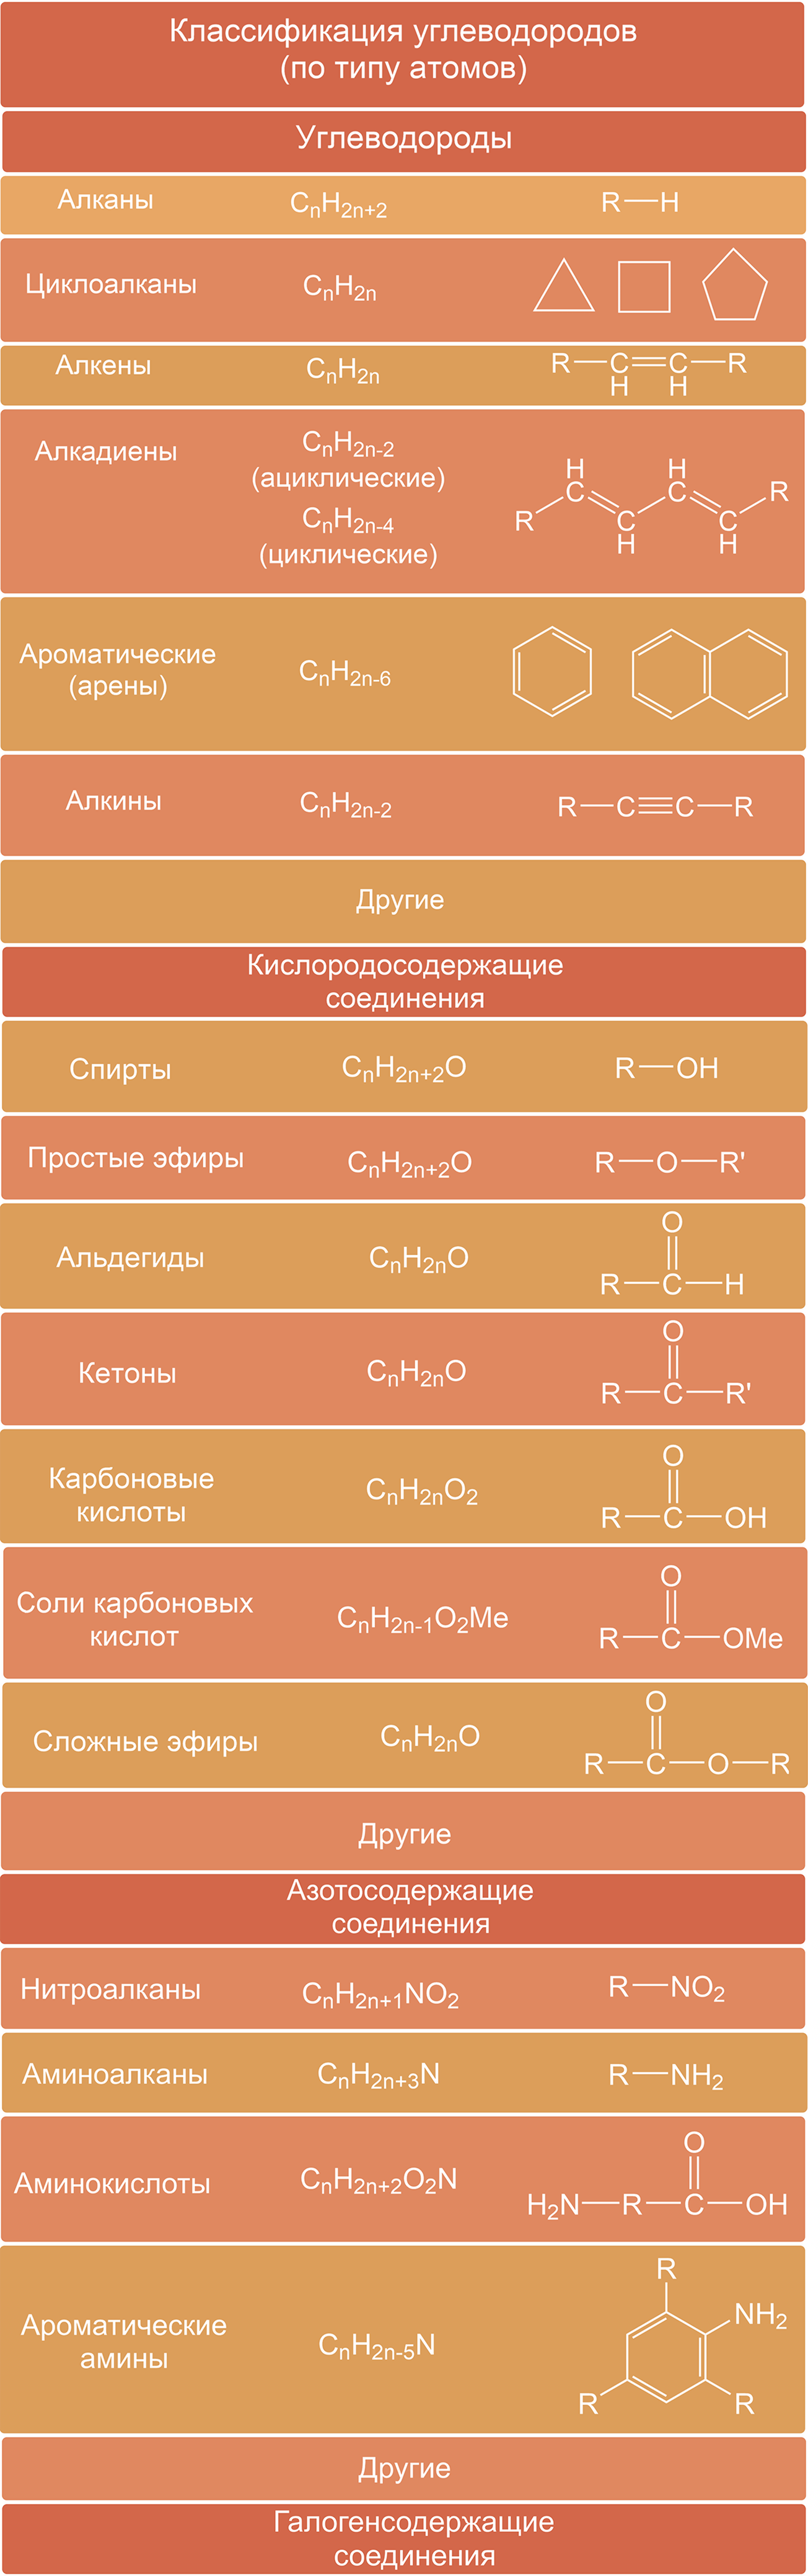 Классификация углеводородов по типу атома